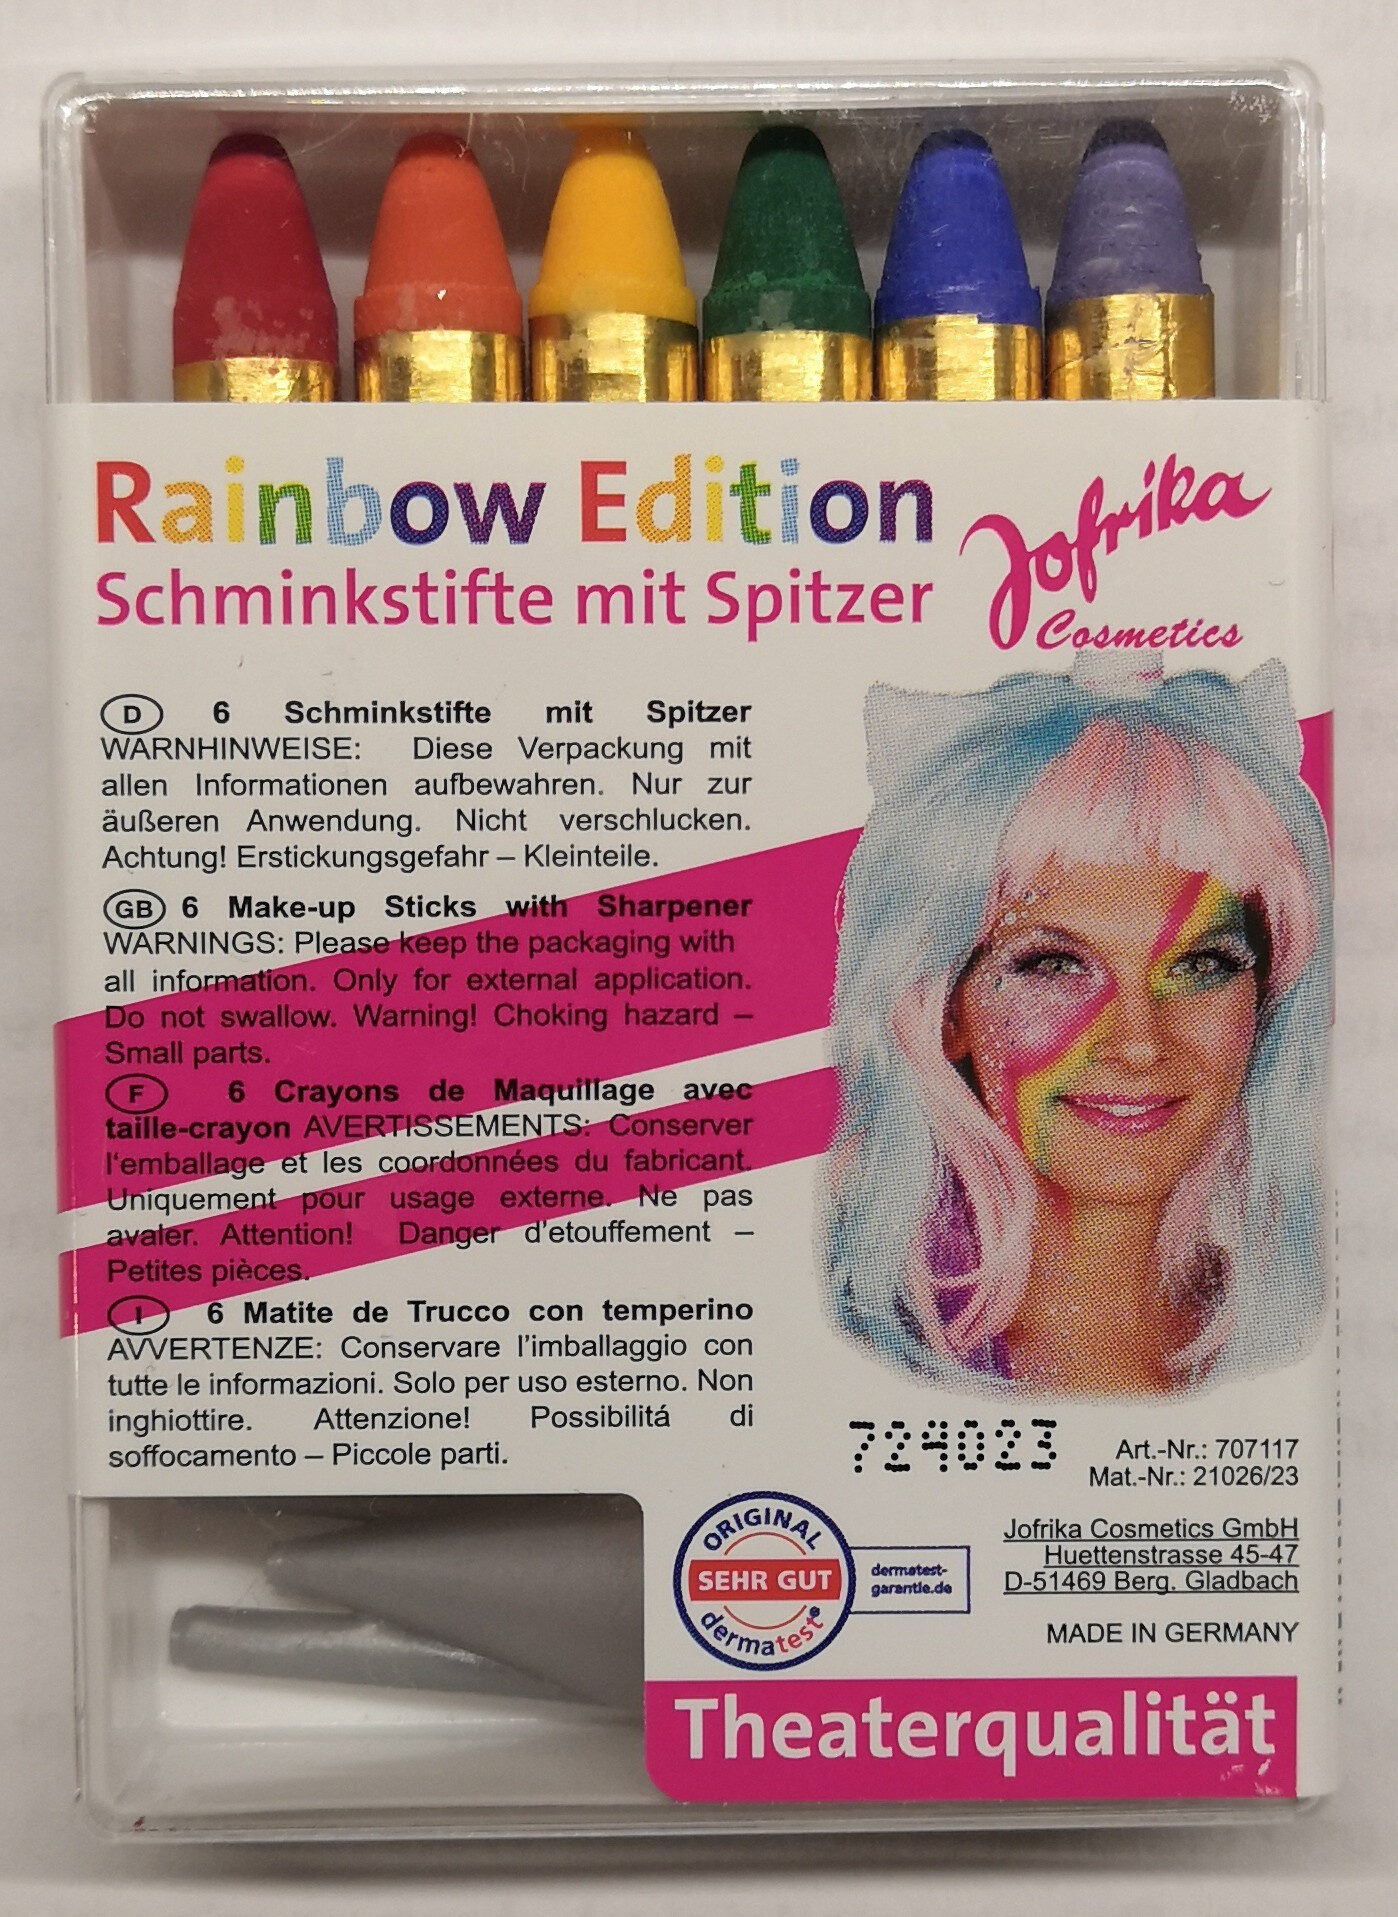 Schminkstifte mit Spitzer, Rainbow Edition - Product - de